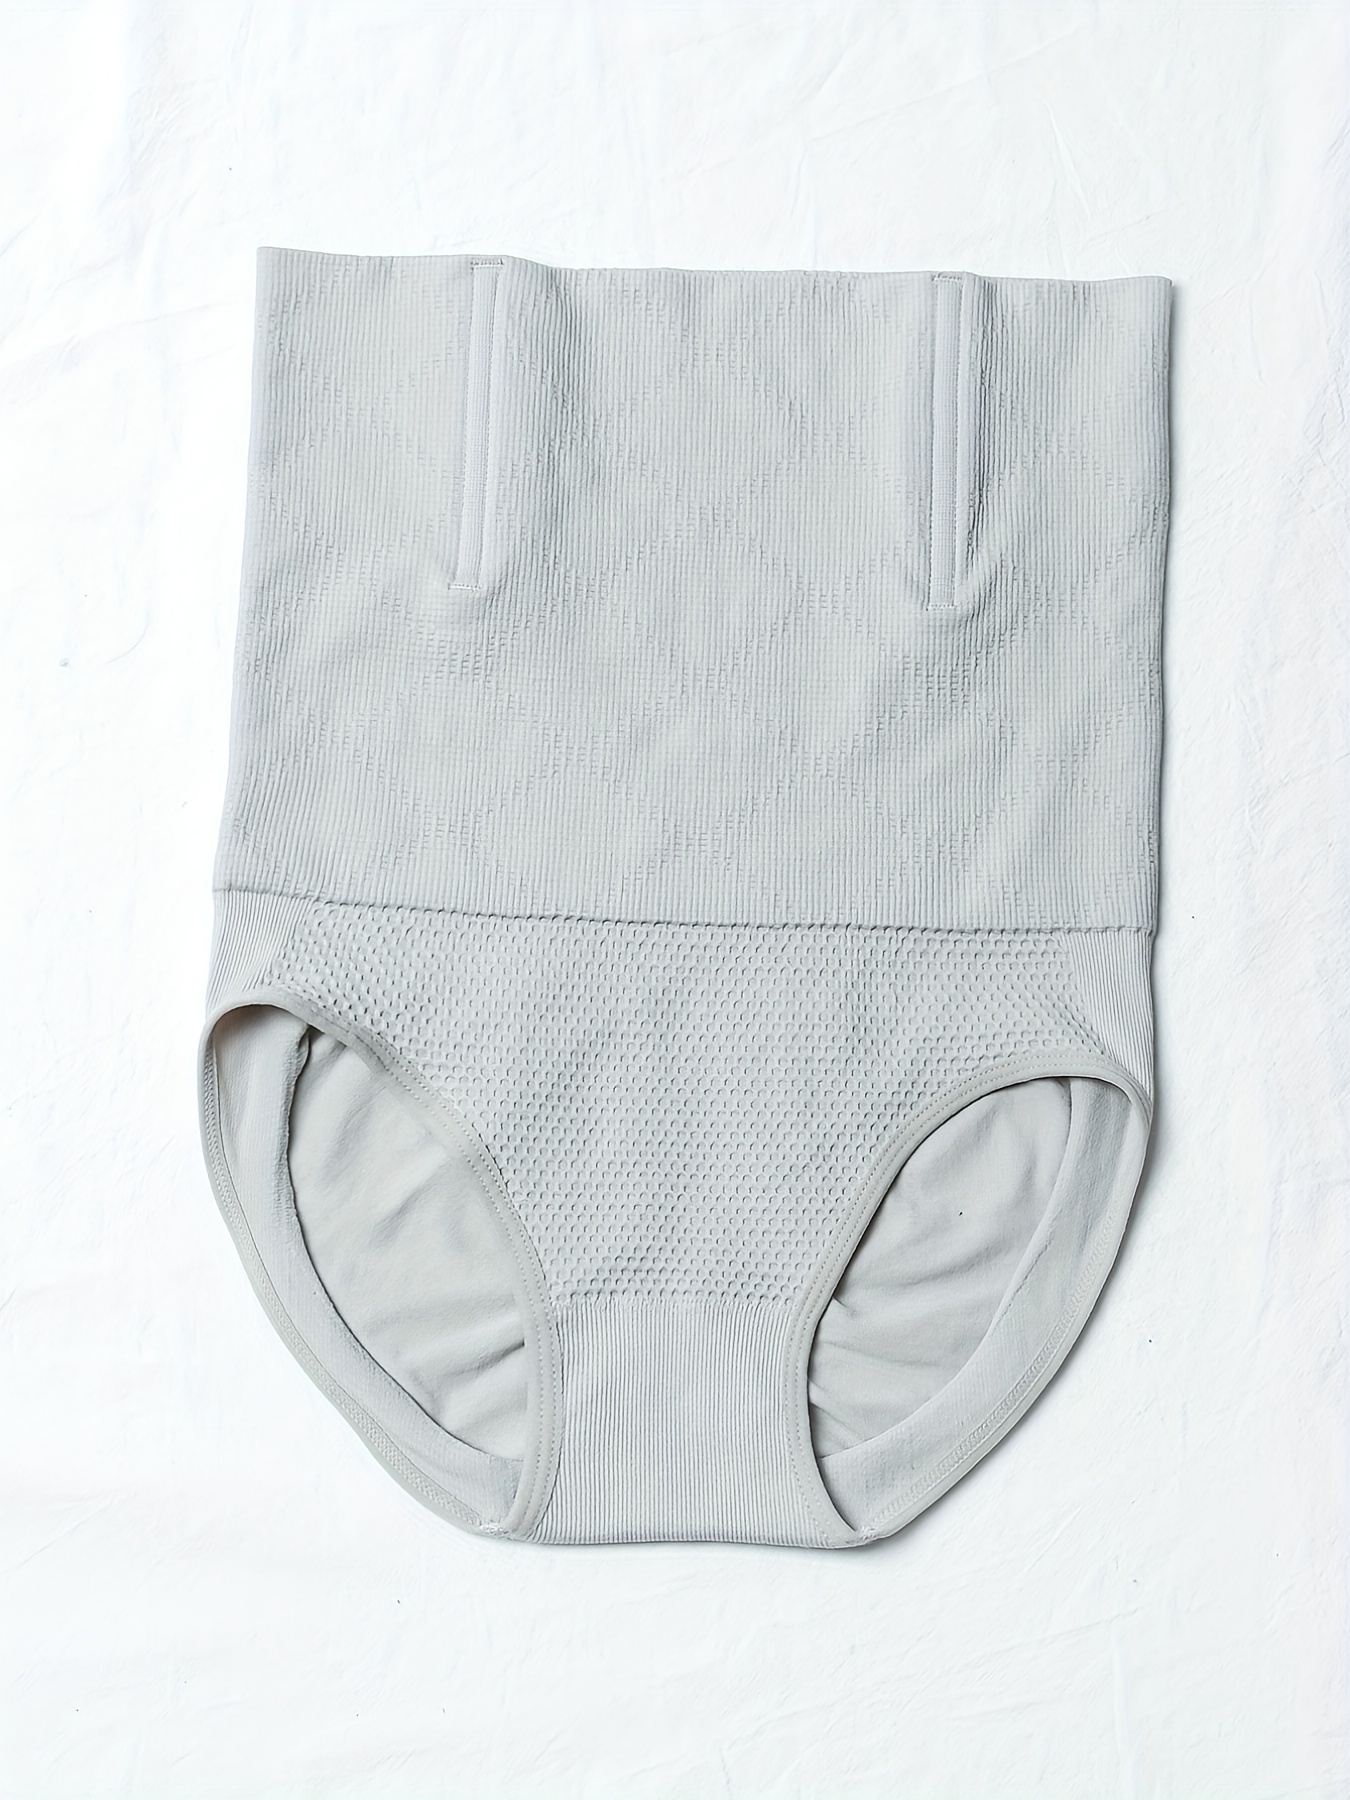 Valianne's Trends Nadia Panty Shapewear with Binder - Tummy Control  Underwear - Mom Body Shaper